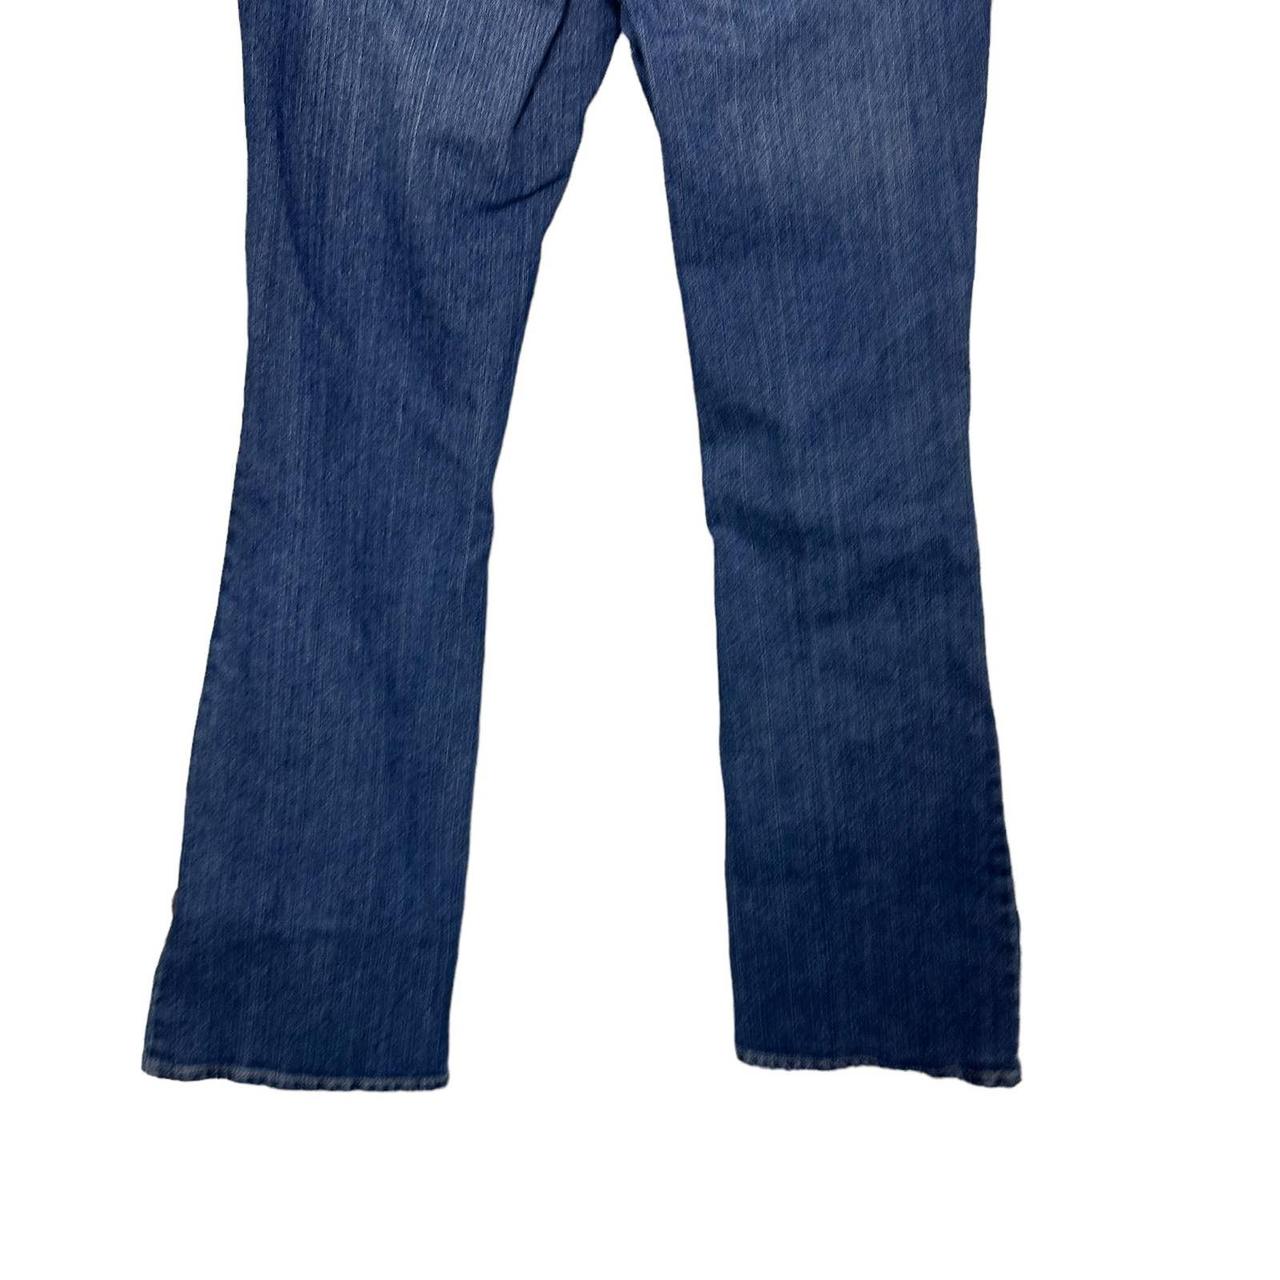 Aeropostale Flare Pants with belt Size 7/8 Zip fly - Depop